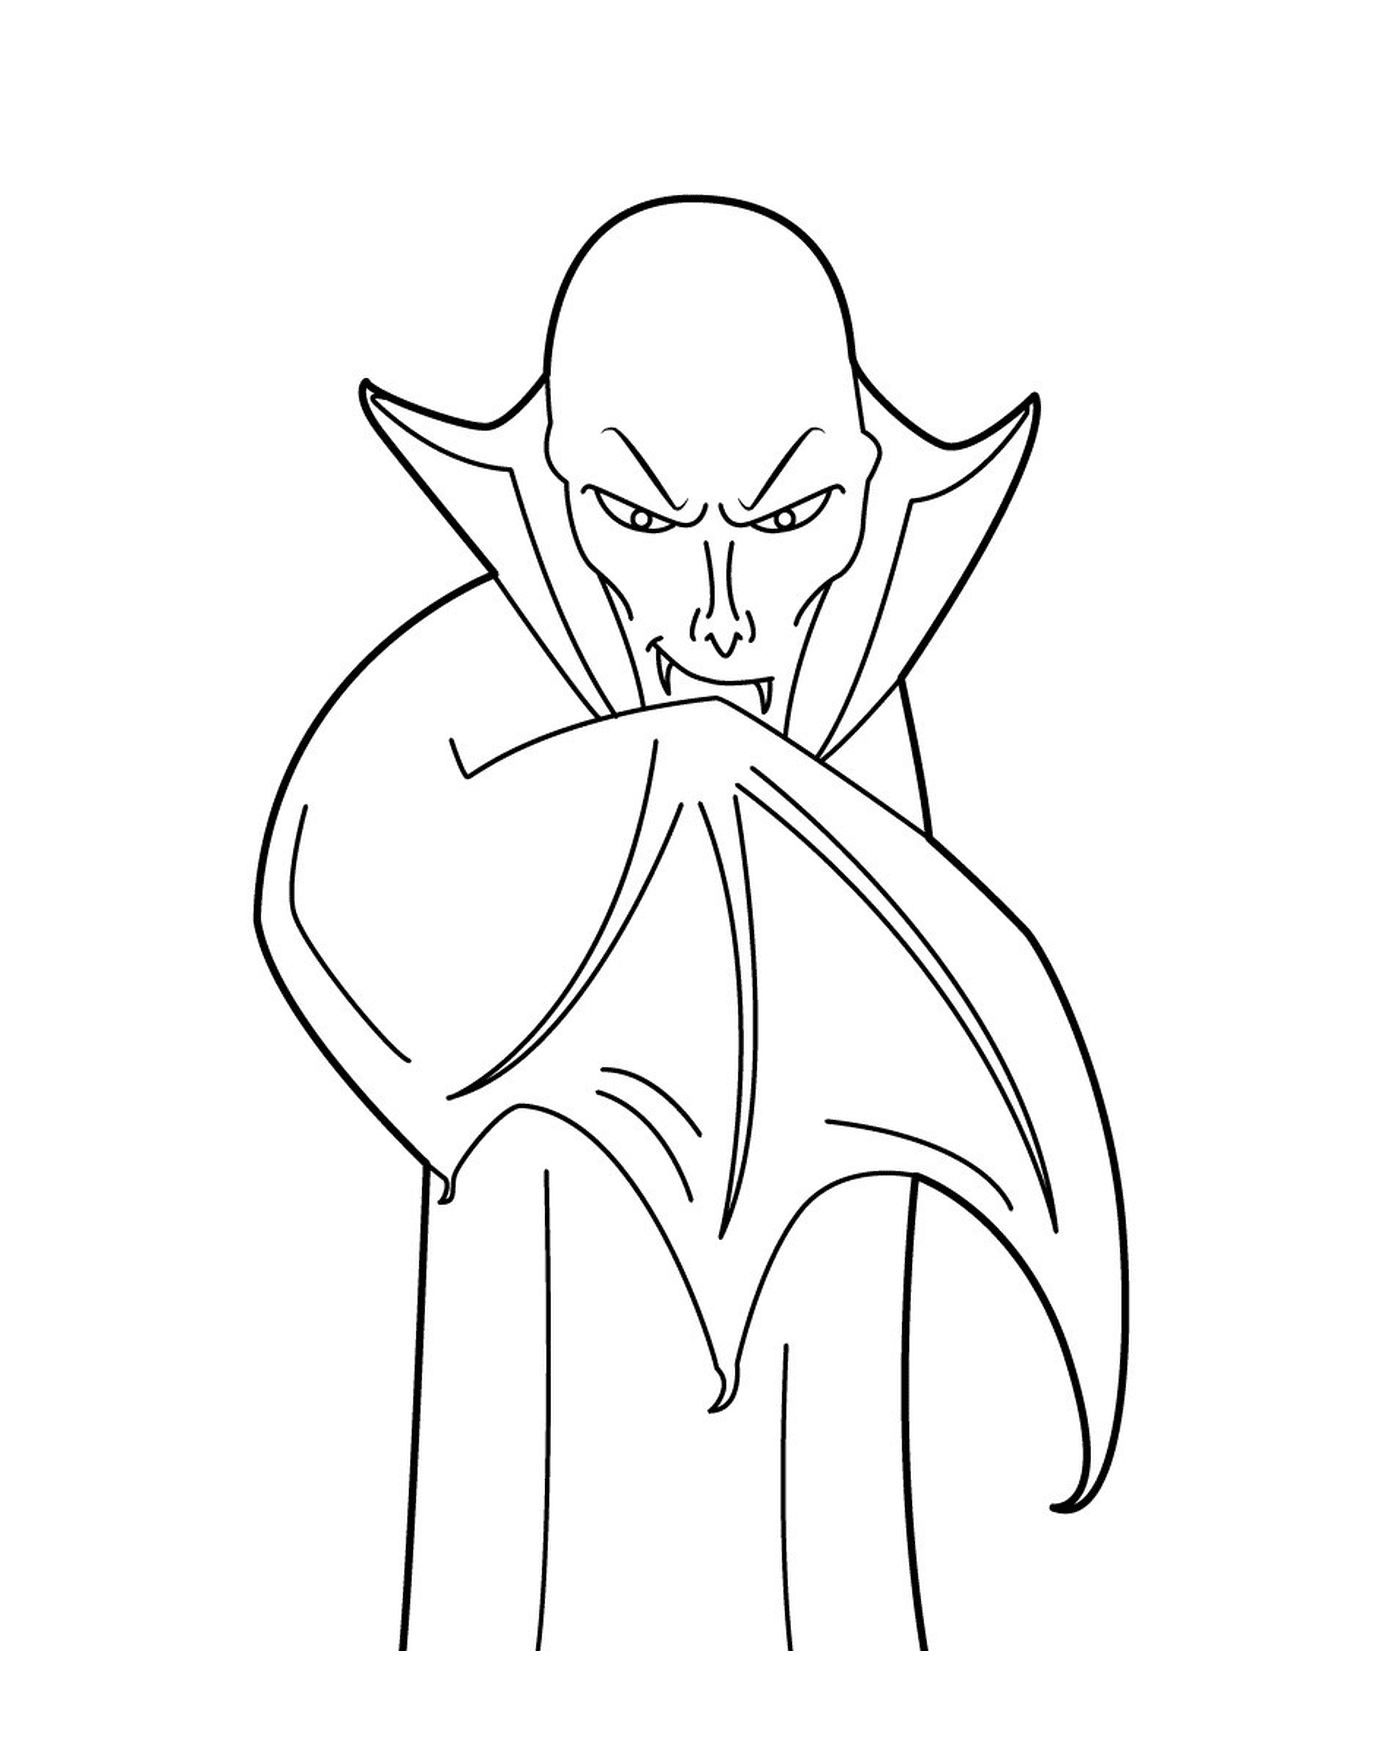  Vampire with bald head, fearsome predator 